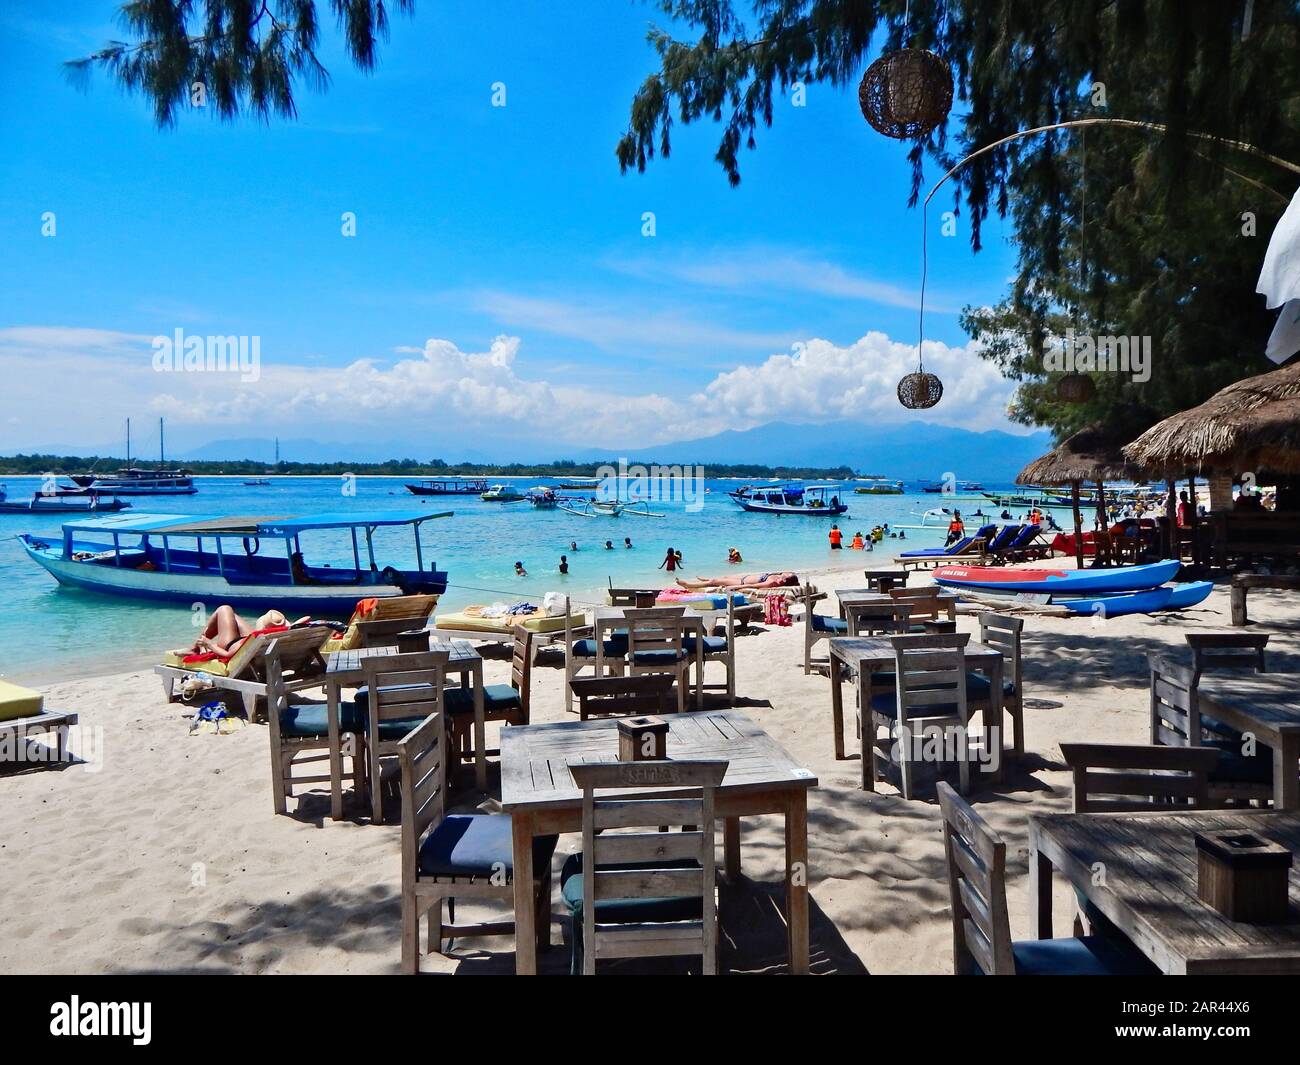 GILI TRAWANGAN, INDONESIA - Jun 09, 2019: Gili Trawangan island in Indonesia has many beach bars and restaurants for tourists to enjoy. Stock Photo